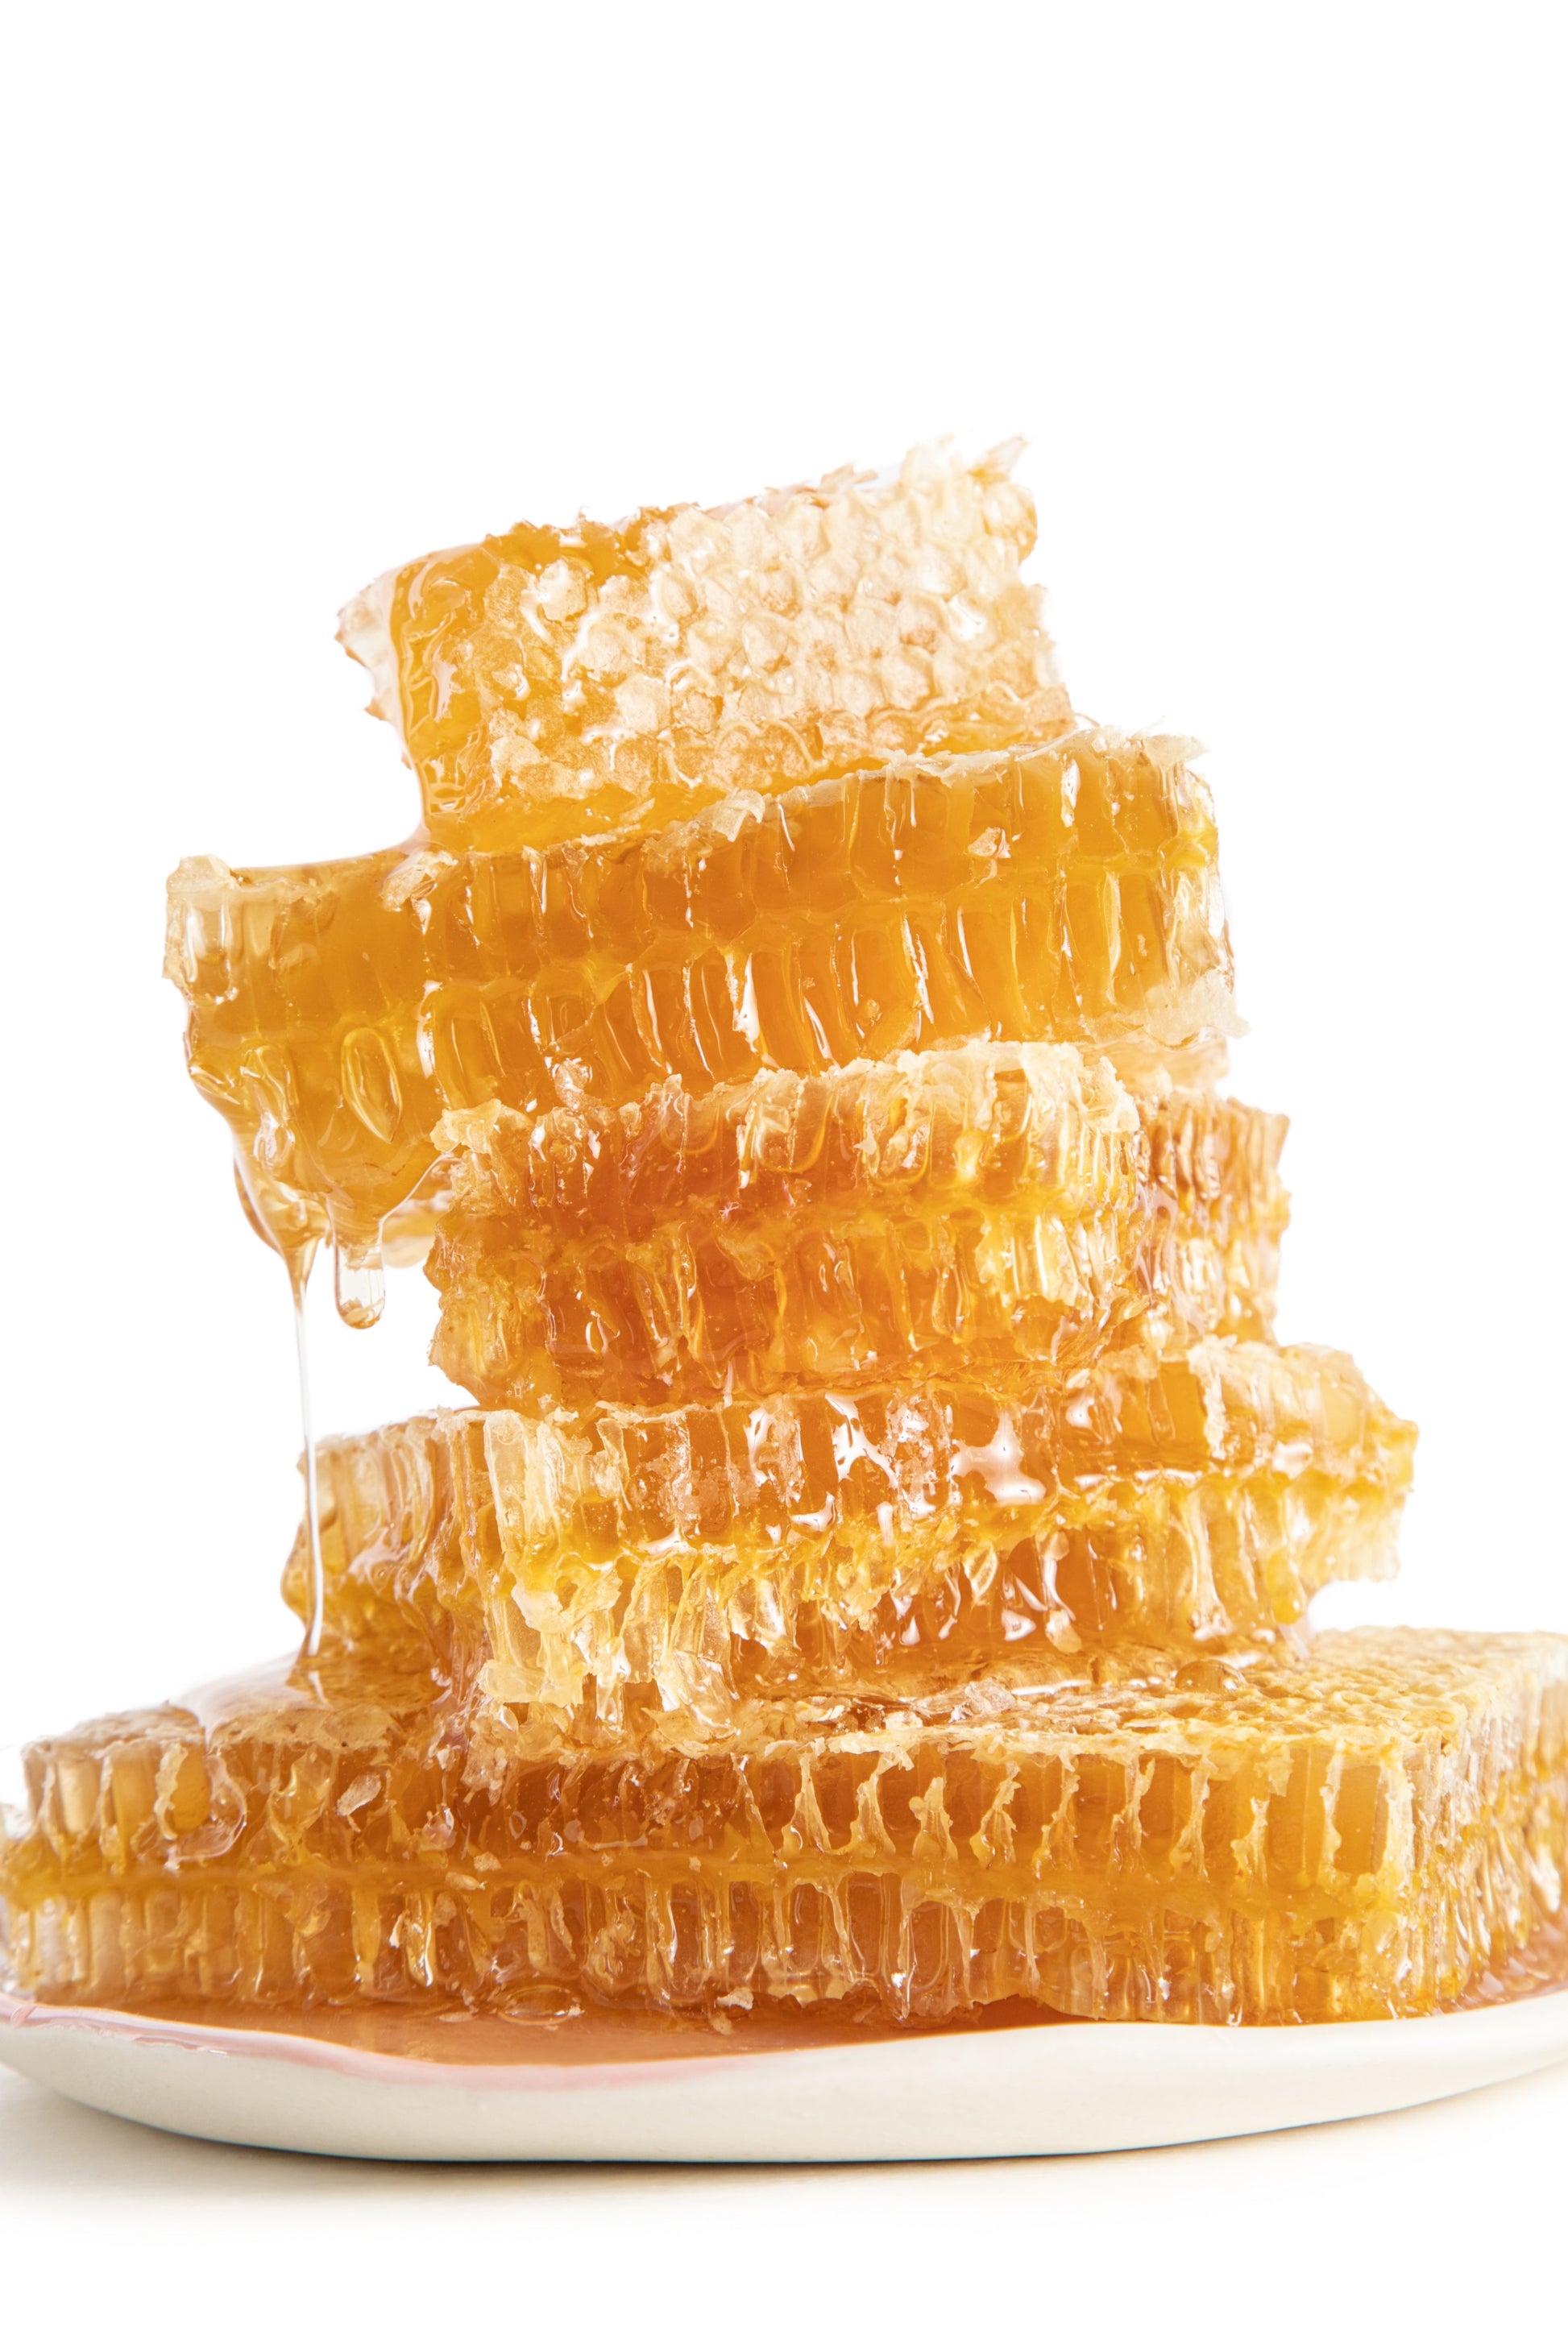 Award-winning raw honey, preserves and healthy alternatives